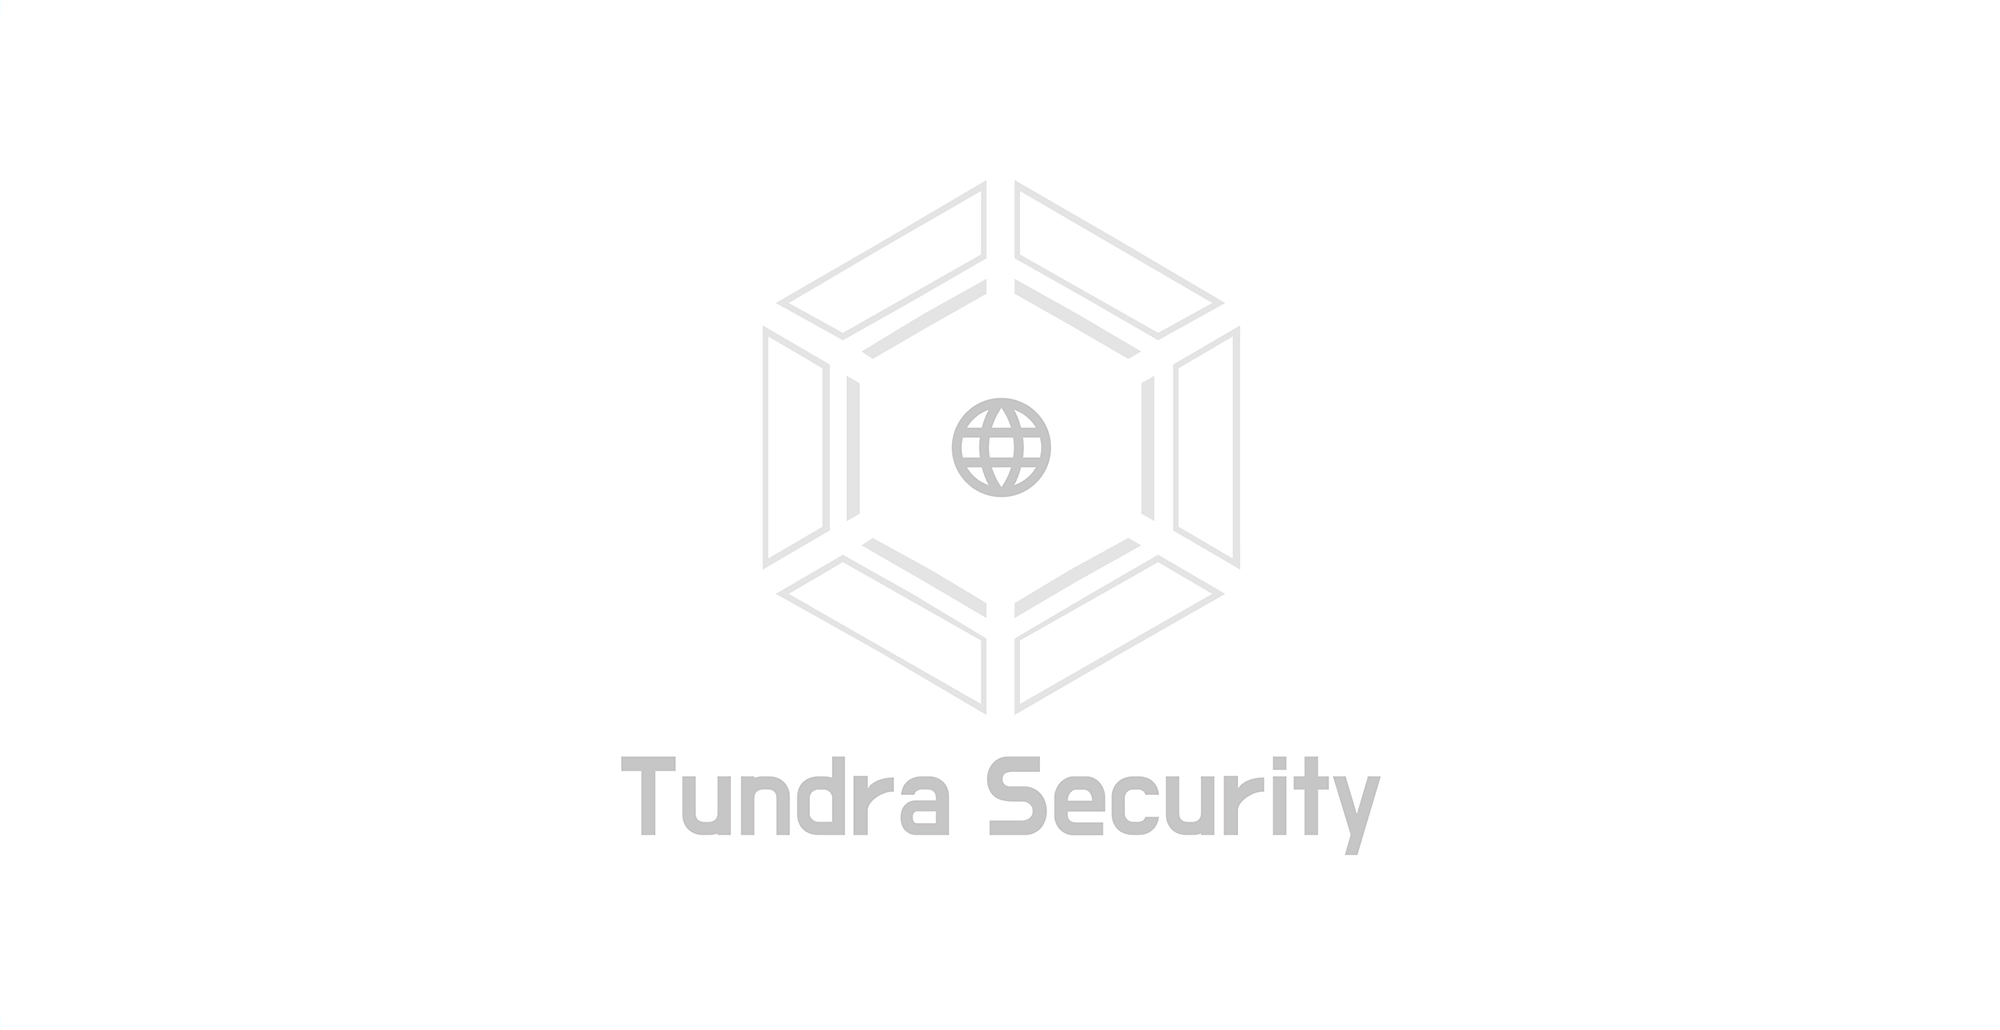 durdygirdy tundra security logo image